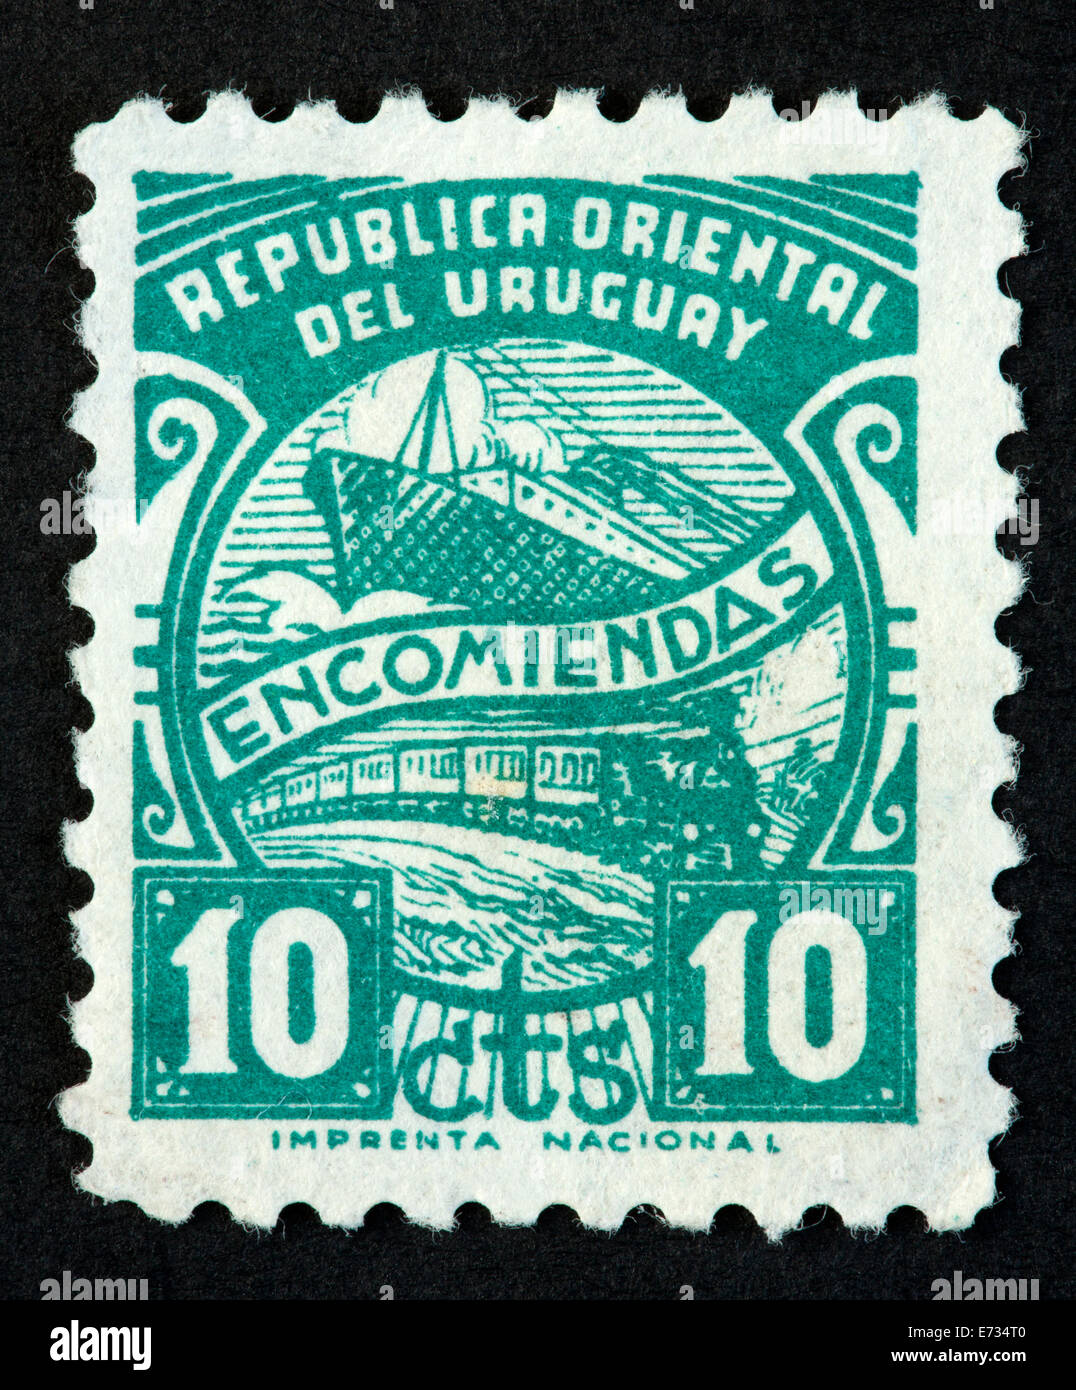 Uruguay francobollo Foto Stock